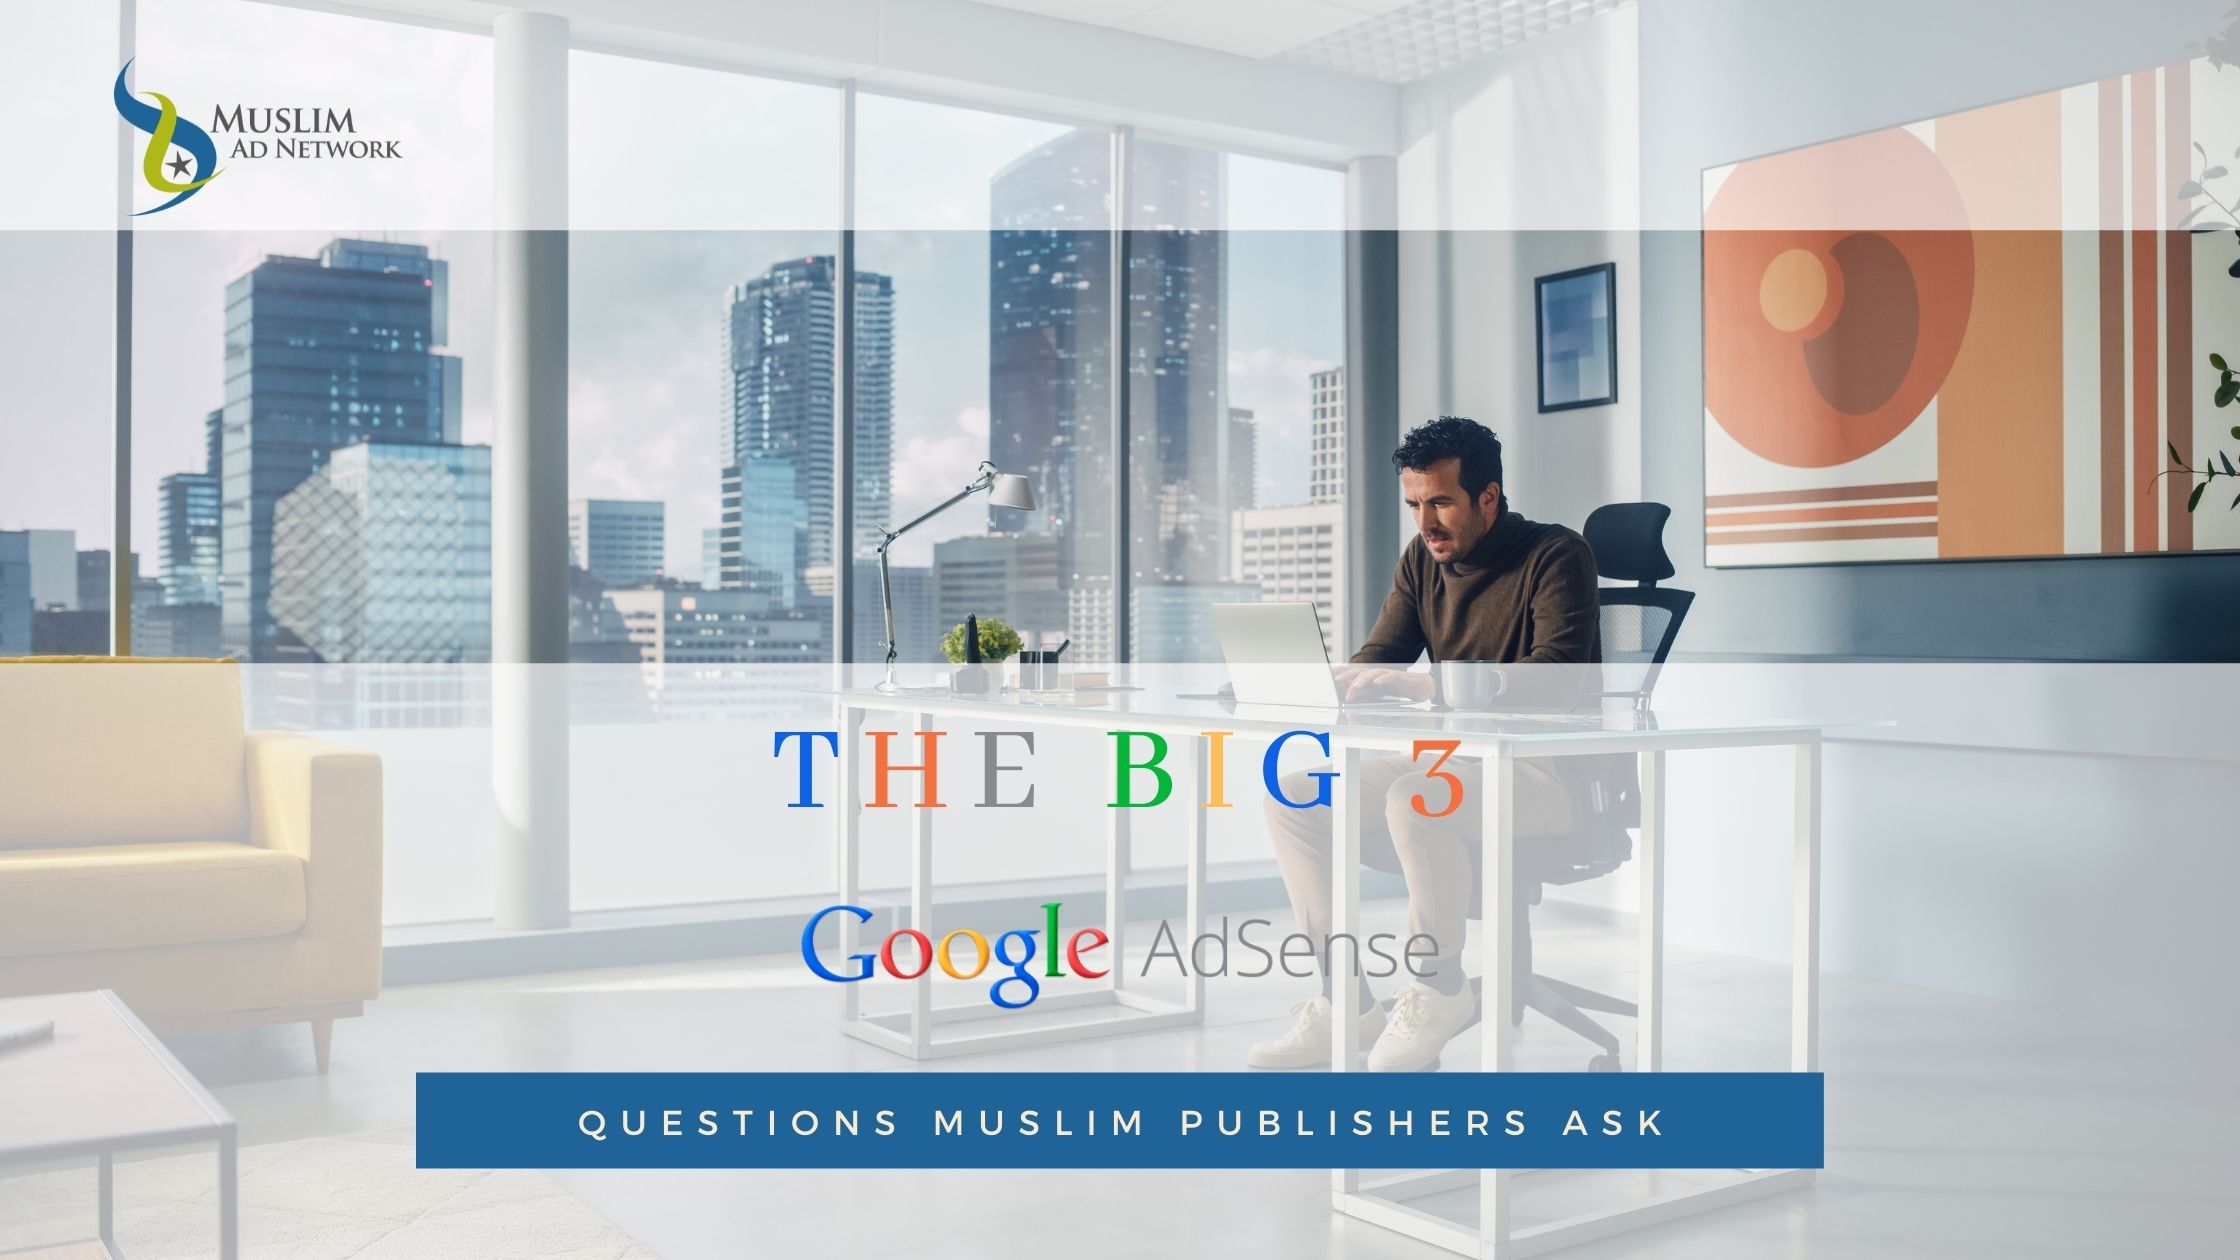 Is google adsense haram or halal?